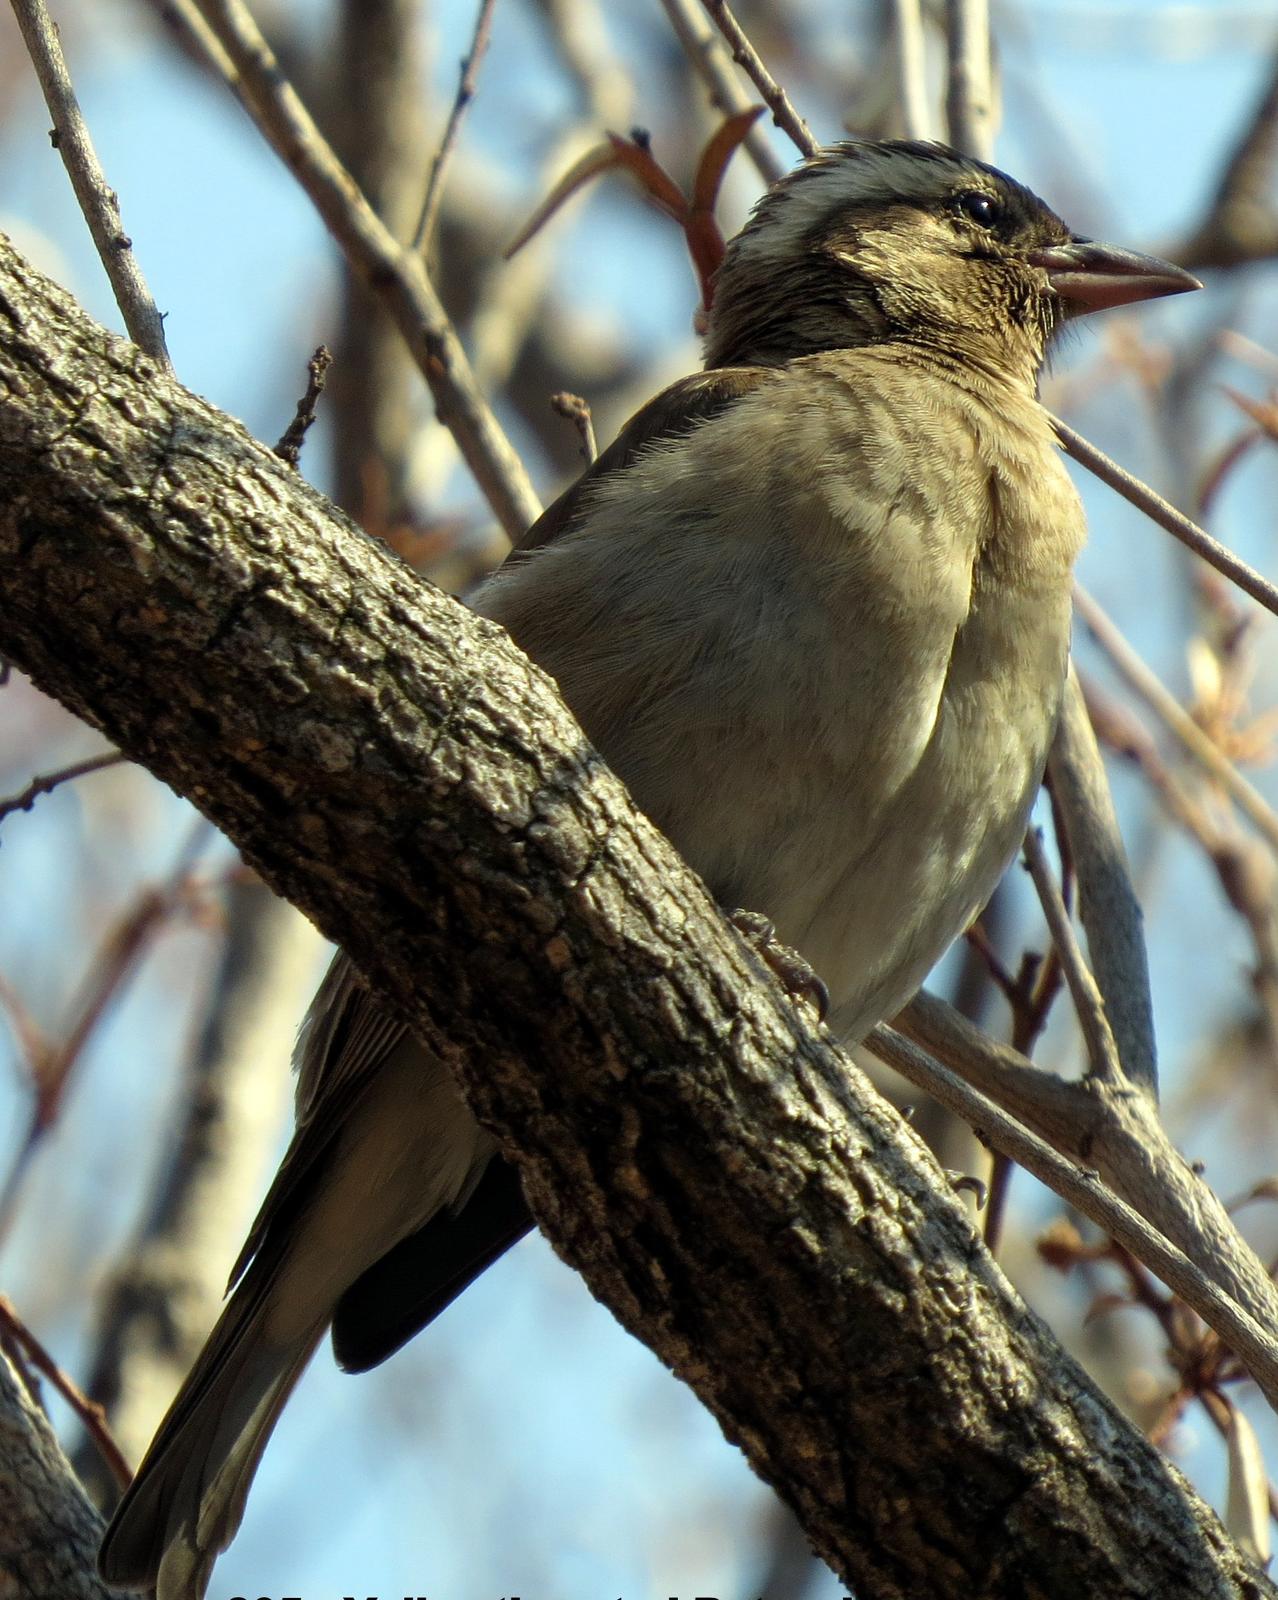 Yellow-throated Bush Sparrow Photo by Richard  Lowe